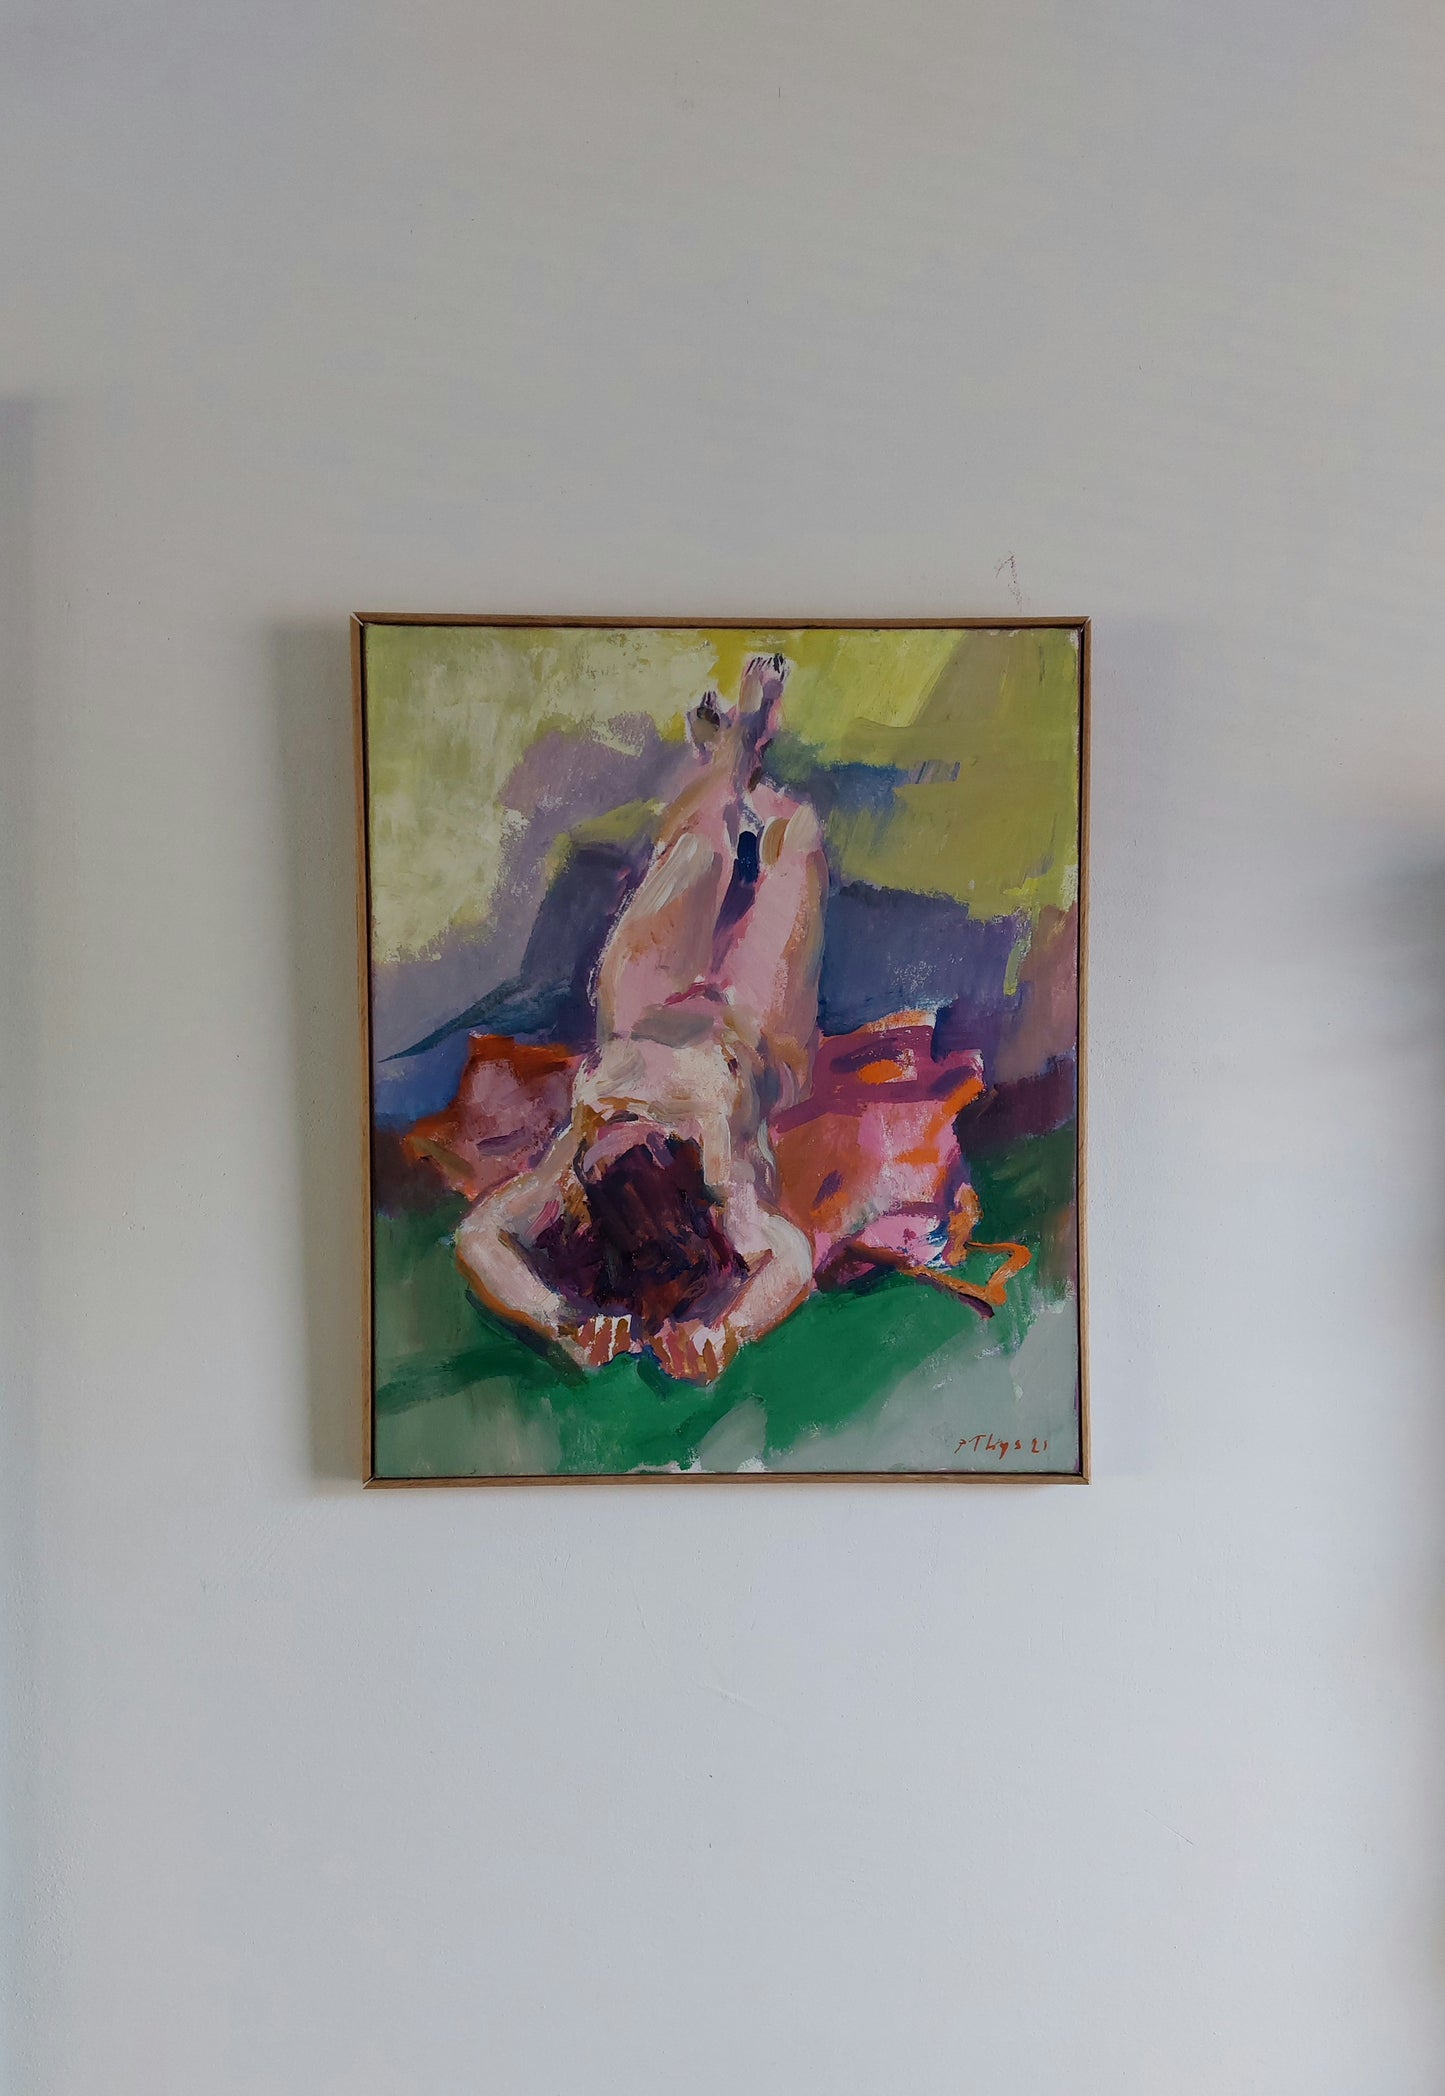 ‘Reclining Figure’ 2021 acrylic, oil on canvas
60x50cm